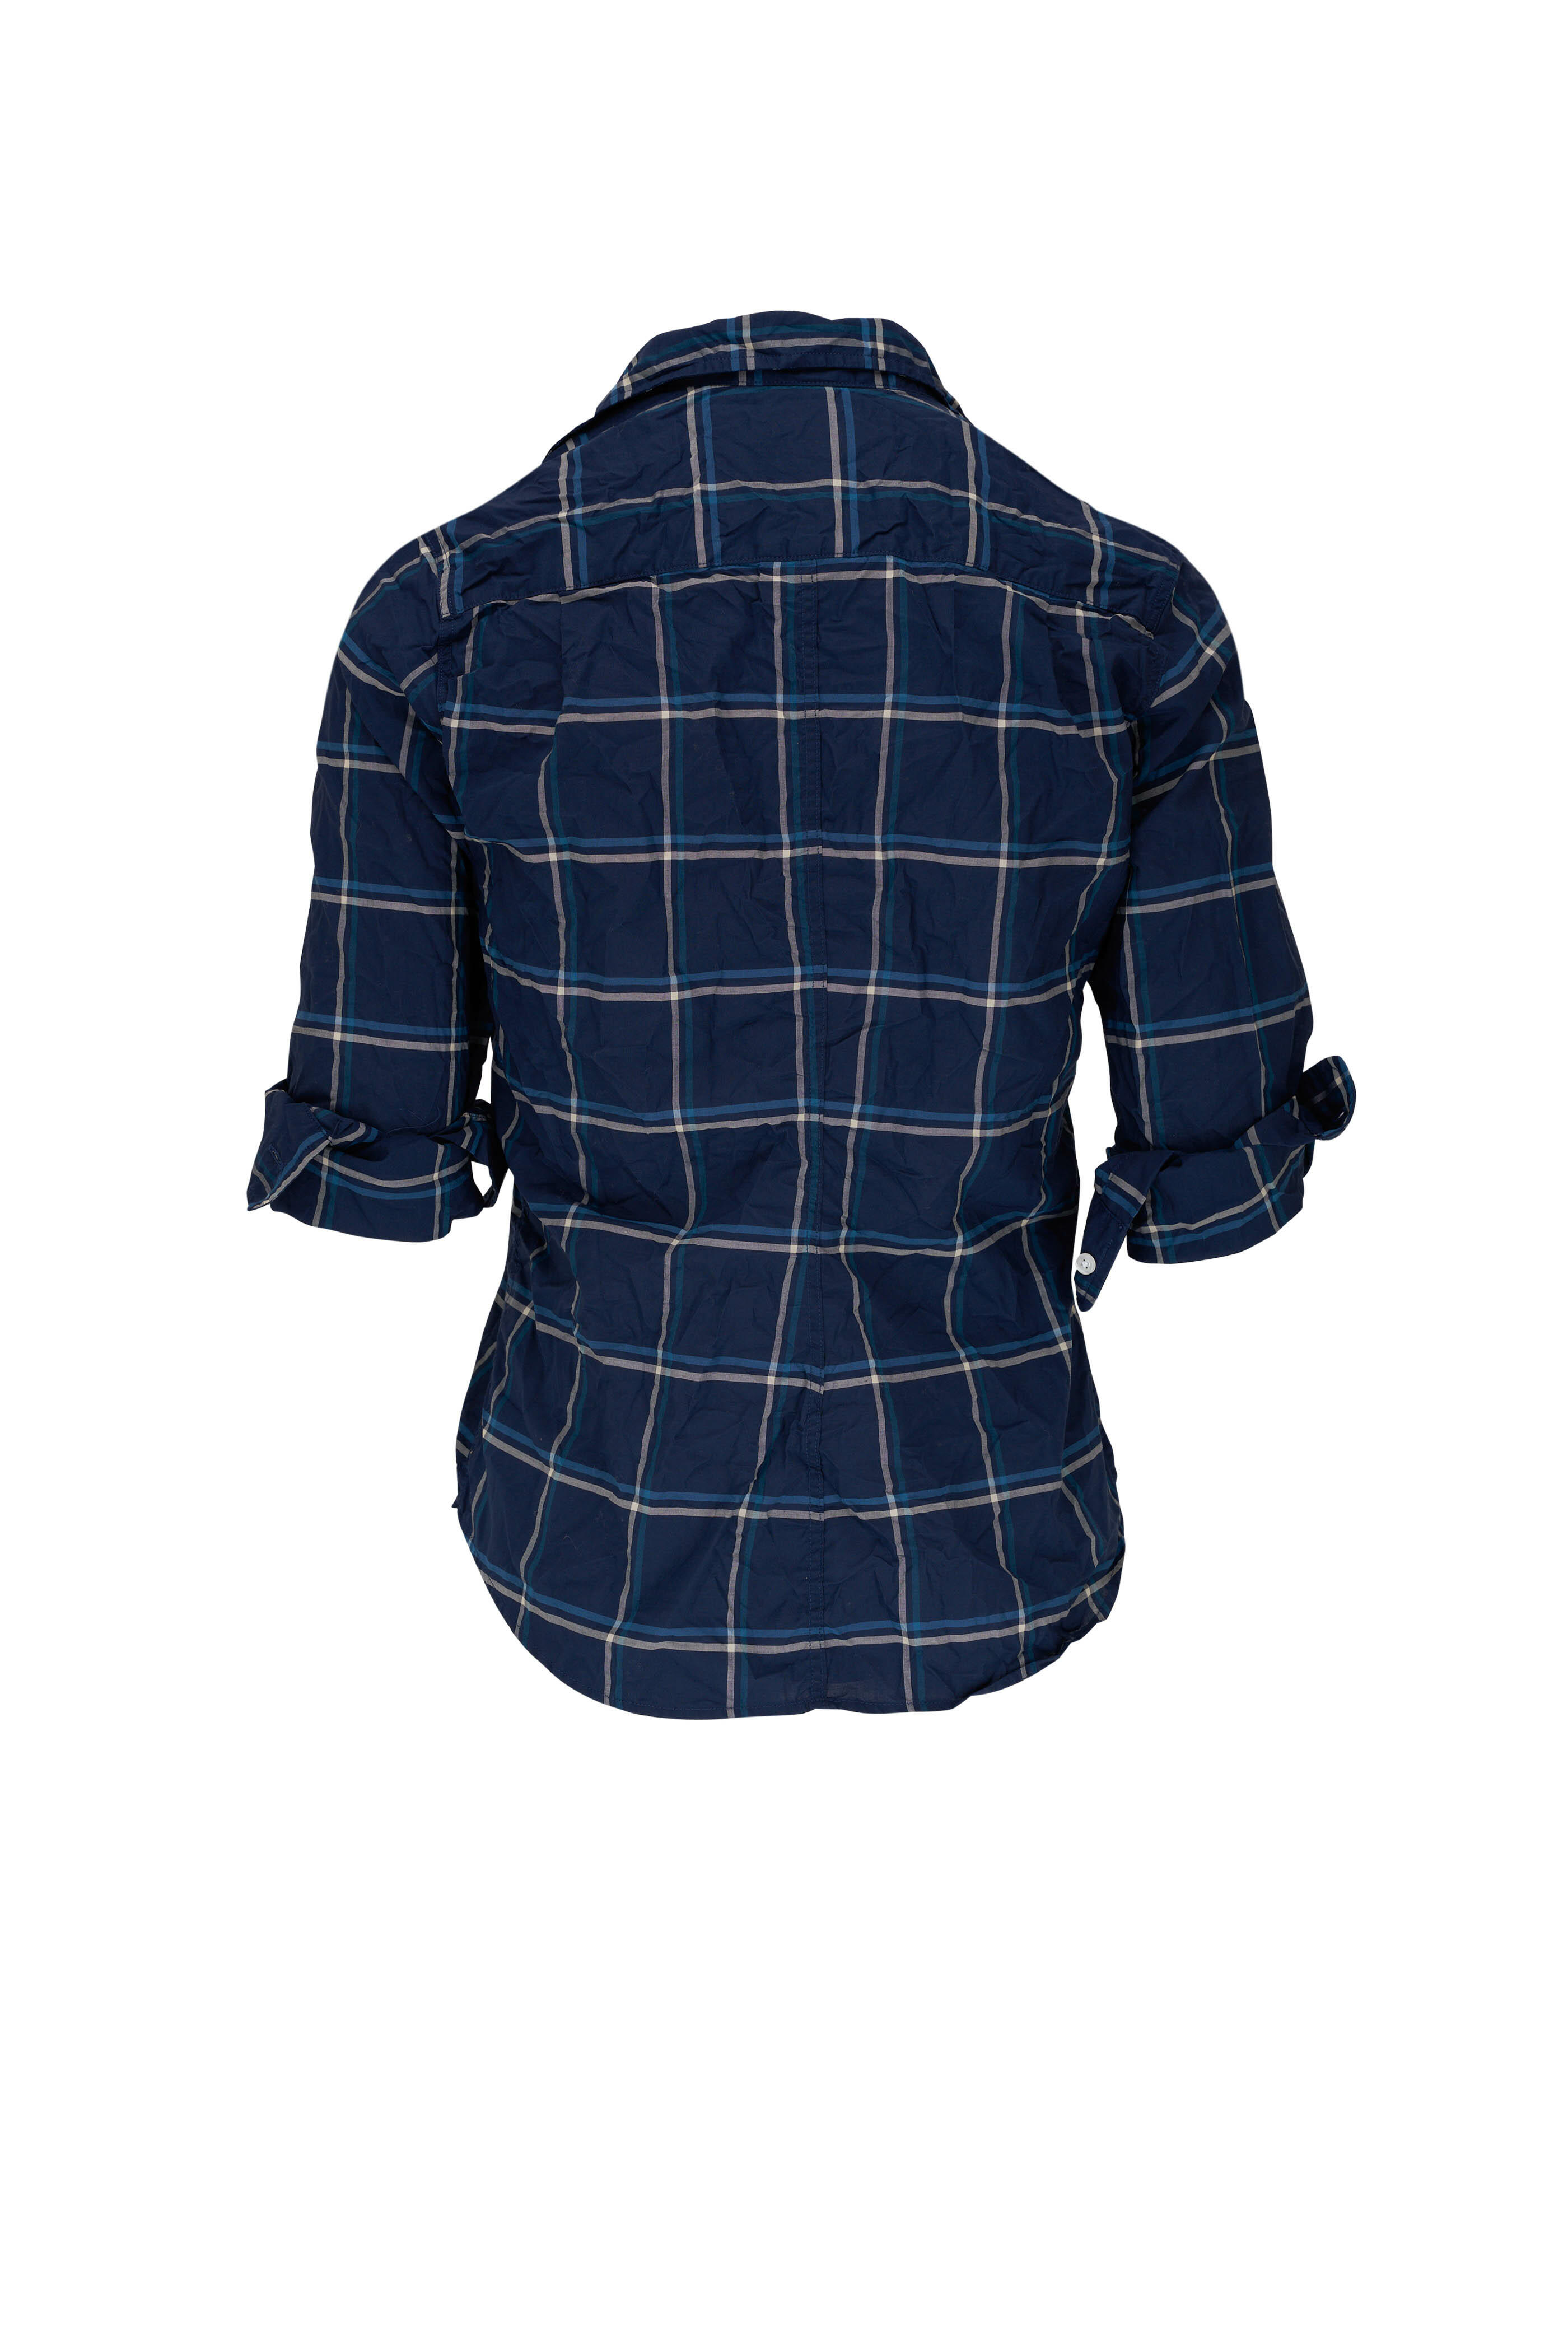 Frank & Eileen - Barry Navy Blue Plaid Shirt | Mitchell Stores